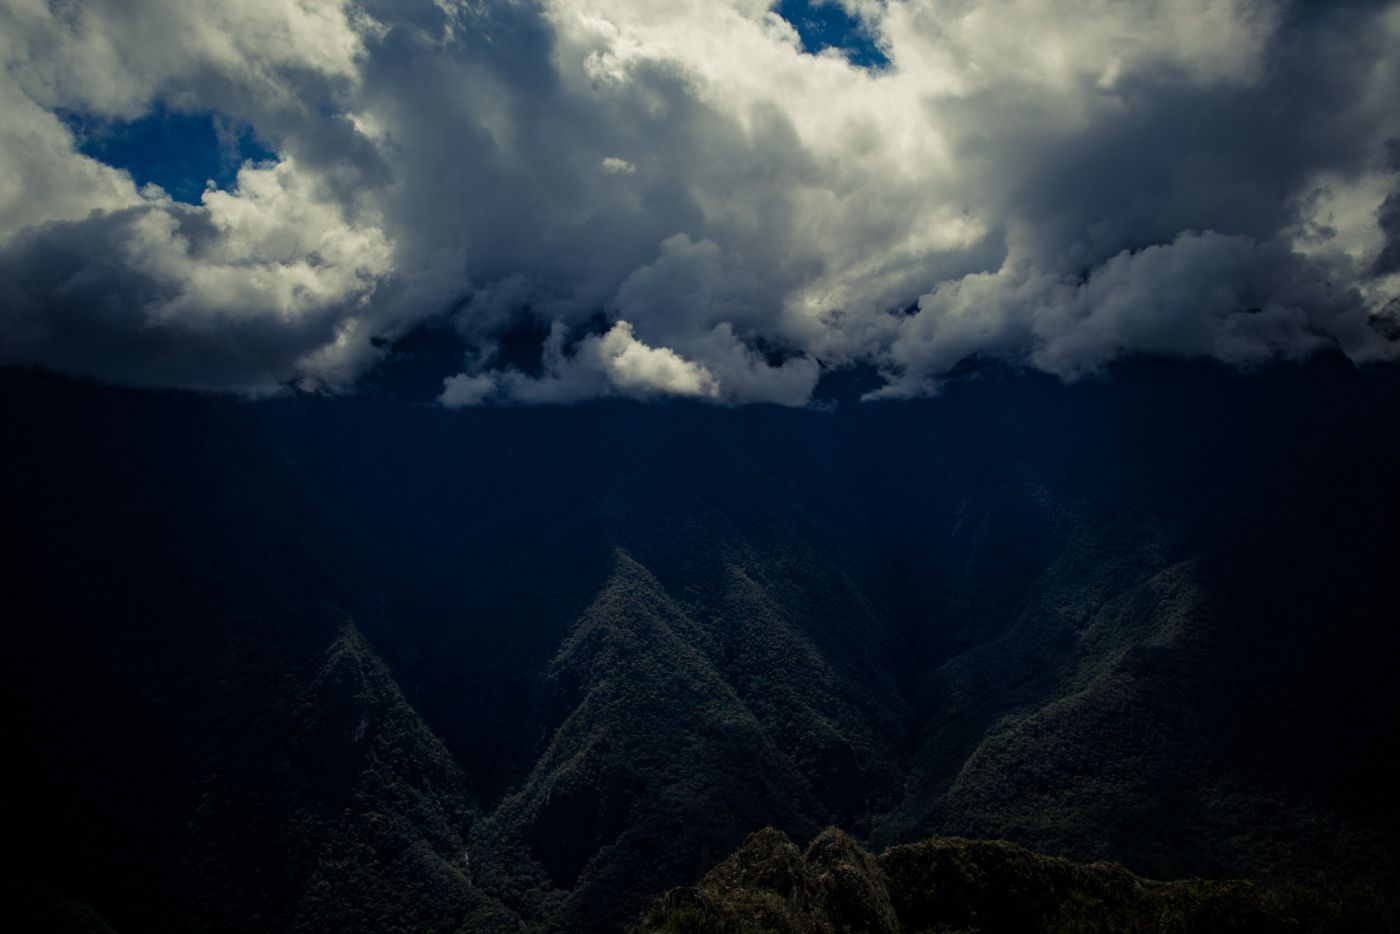 Huayna Picchu, Machu Picchu, Salkantay Trek, Peru